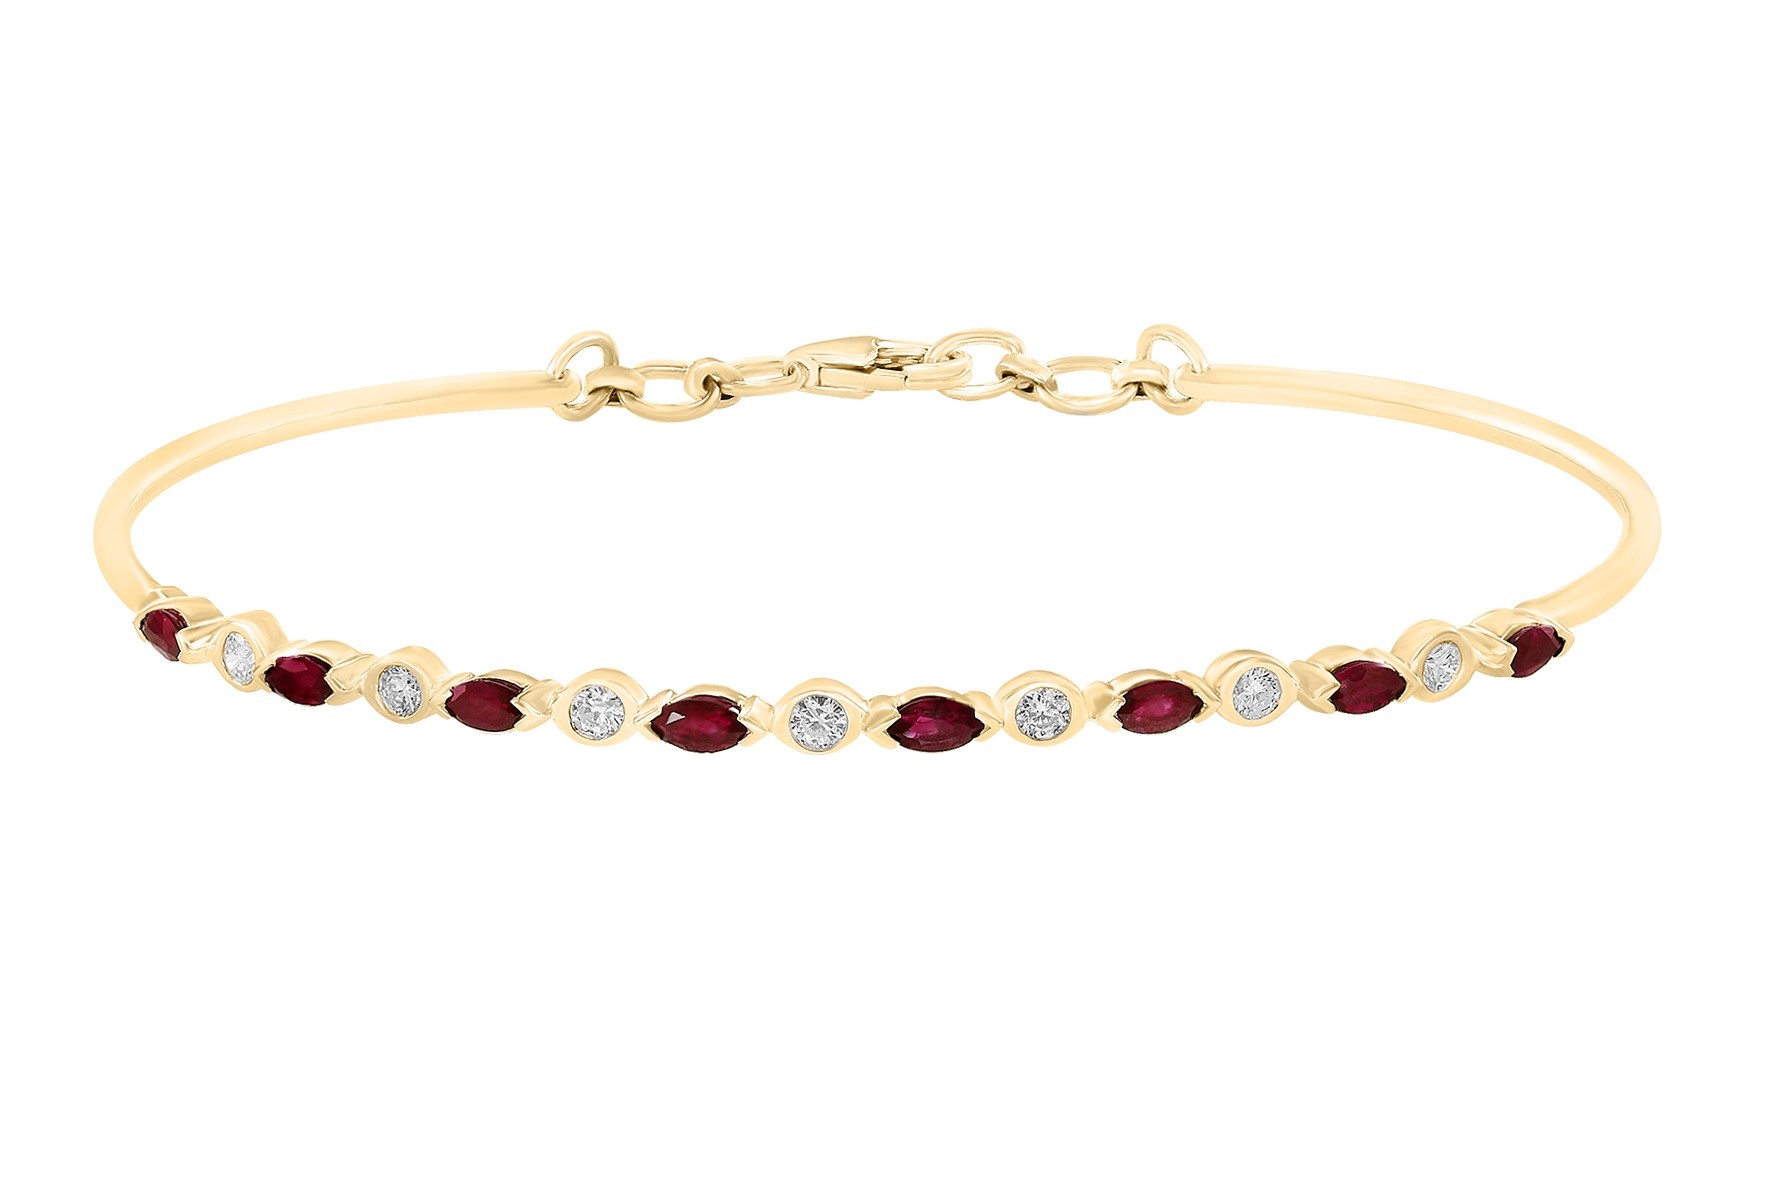 Lali 14 karat yellow gold ruby and diamond bangle bracelet